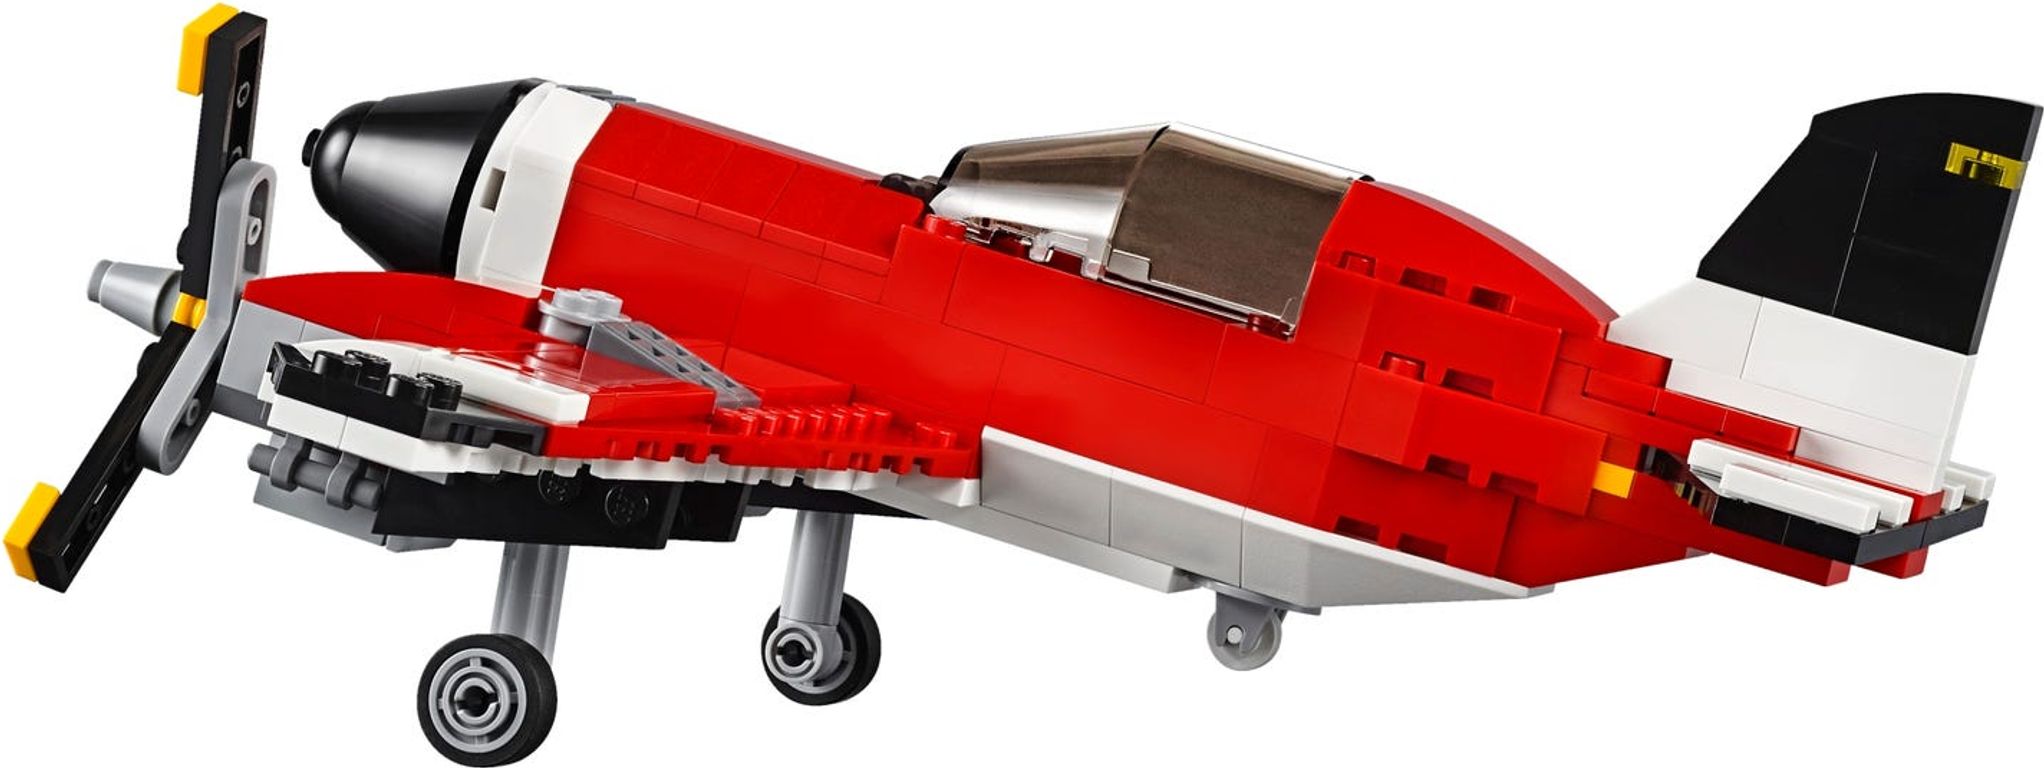 LEGO® Creator Propeller Plane components